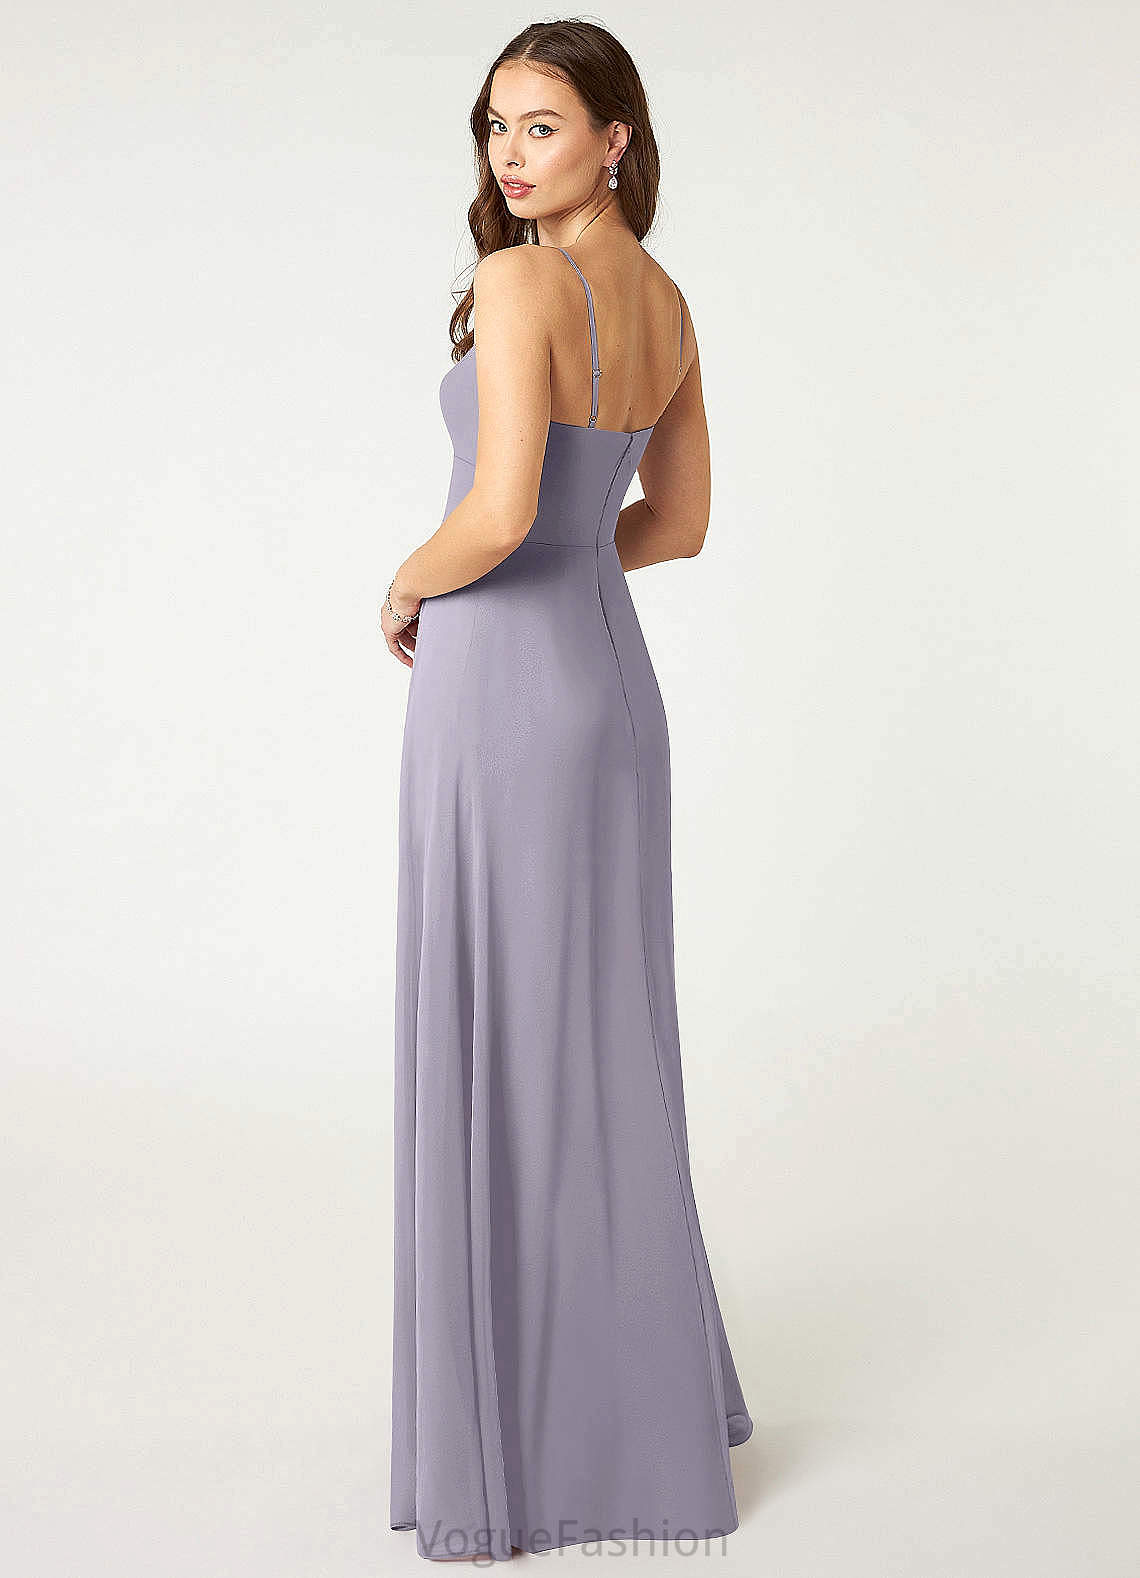 Jean Halter Natural Waist Floor Length Sleeveless A-Line/Princess Bridesmaid Dresses